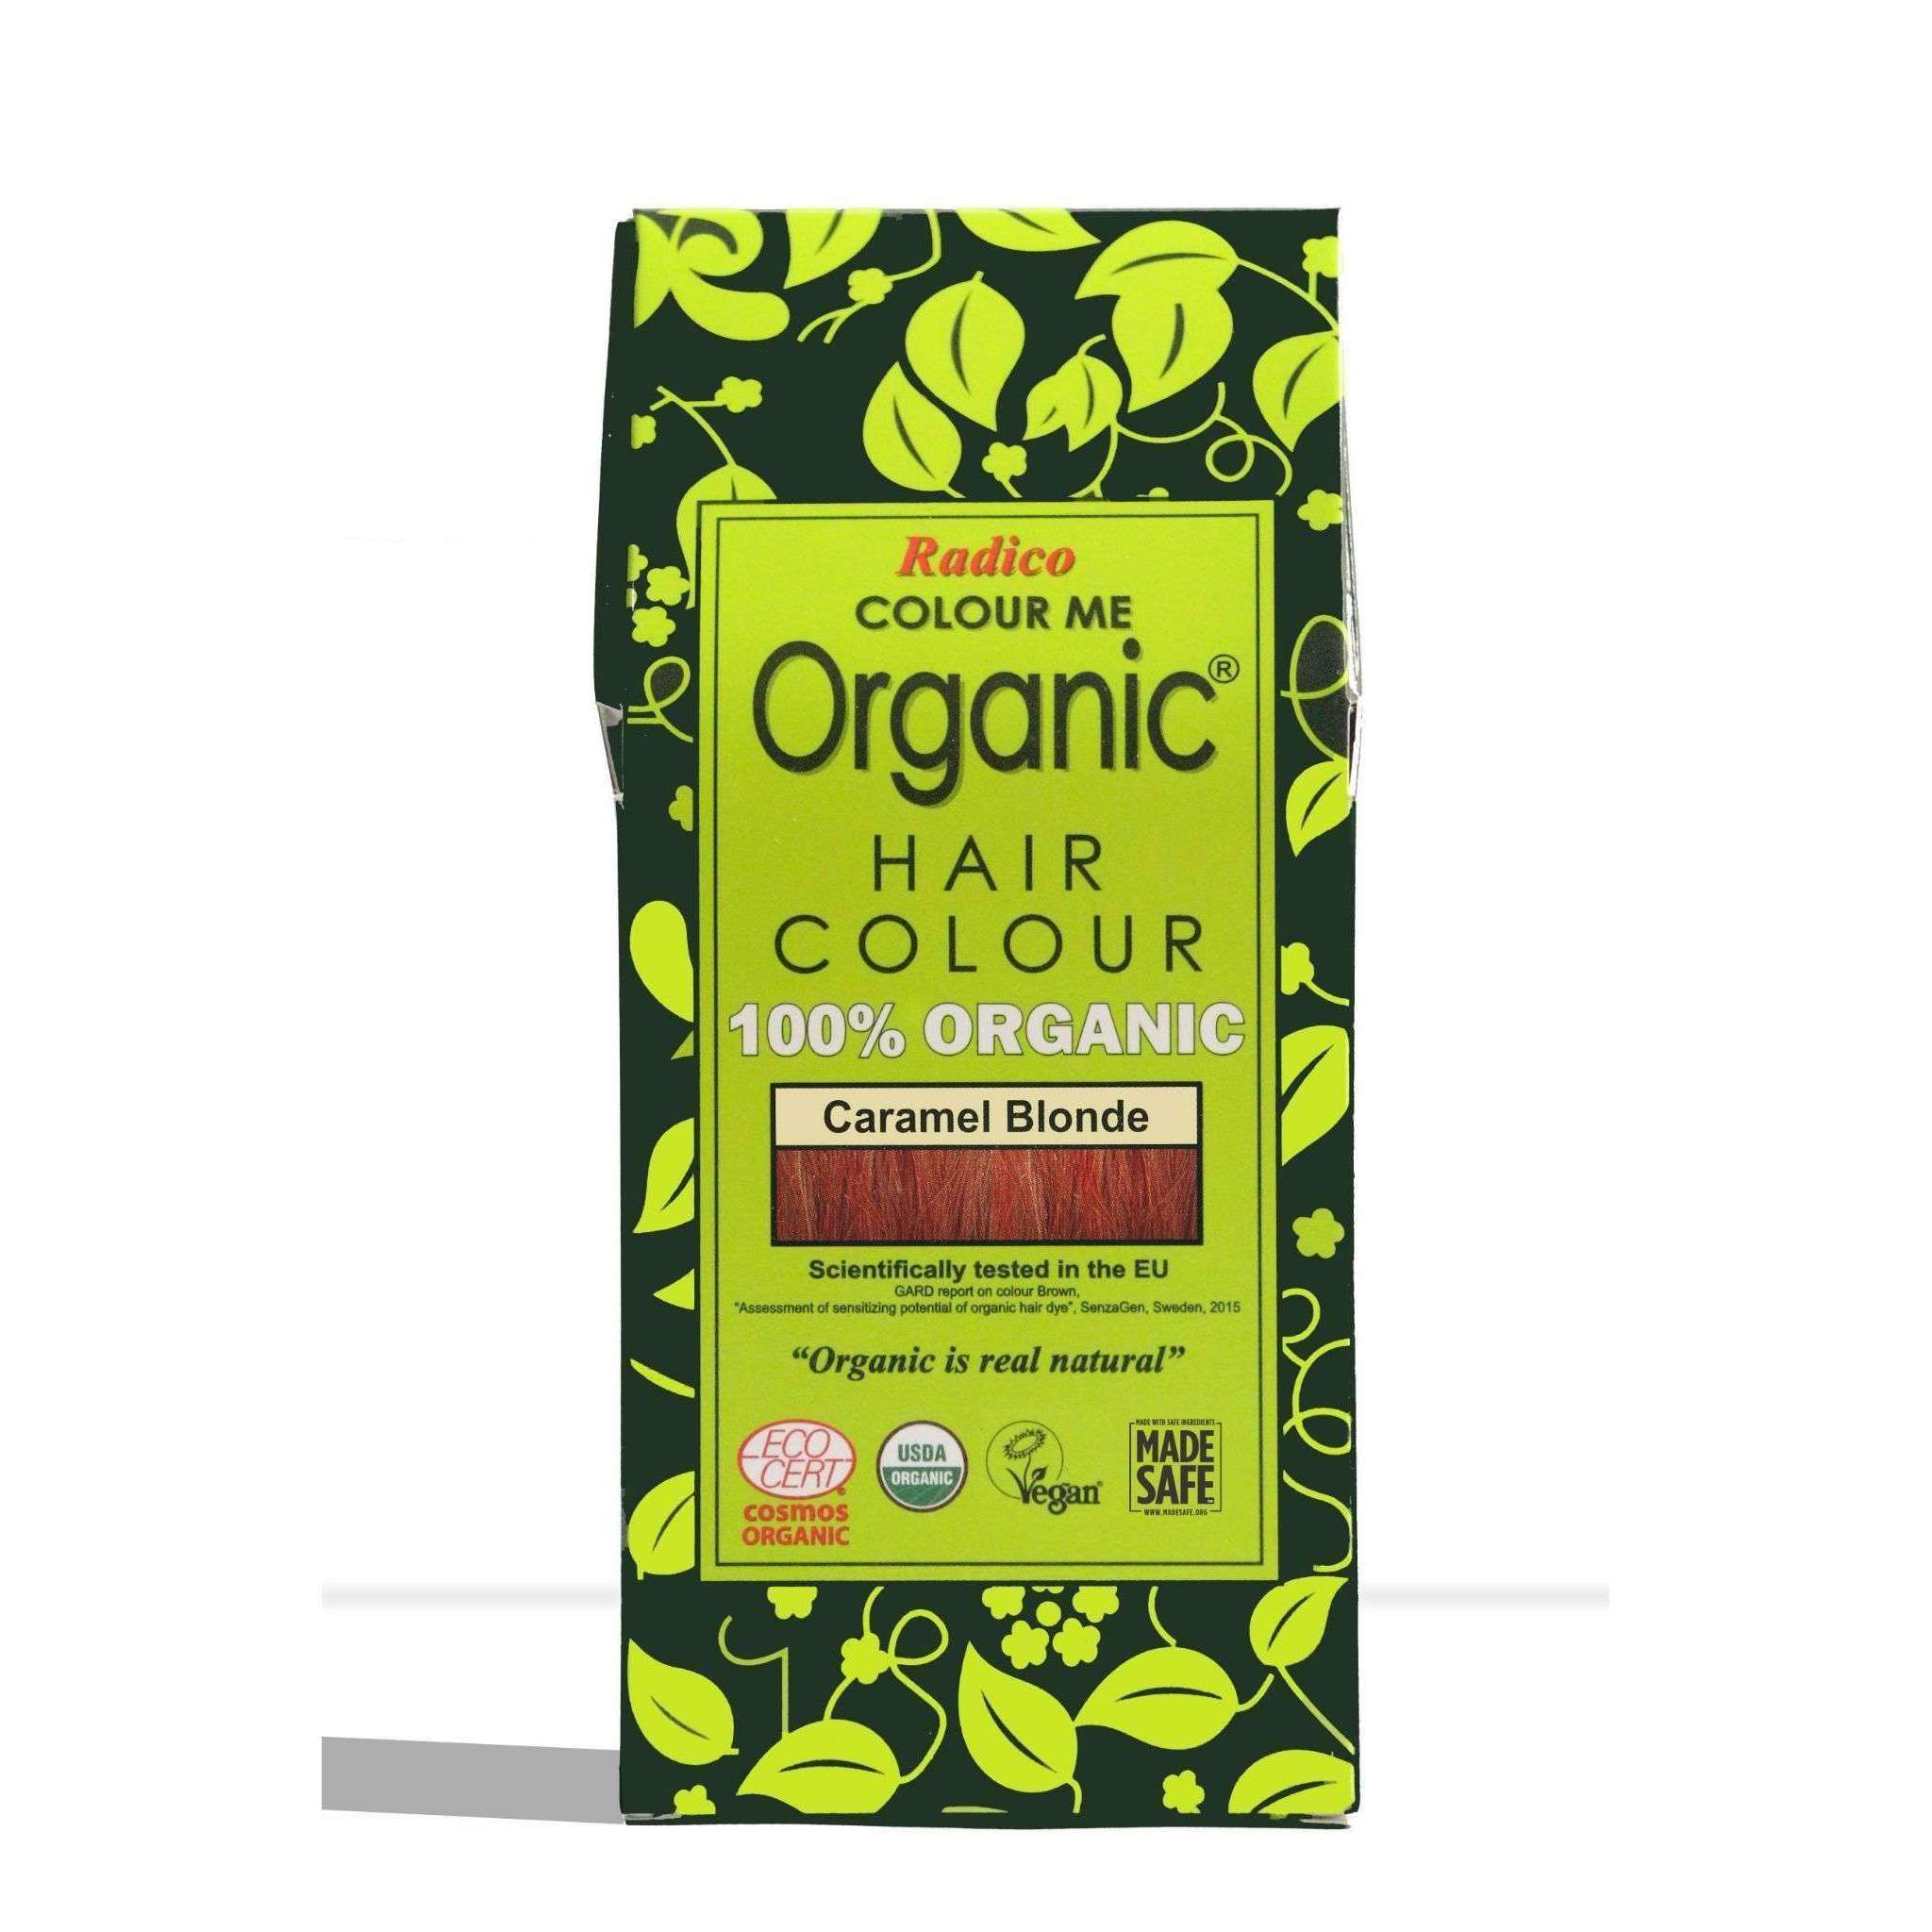 Radico Organic Hair Colour - Caramel Blonde